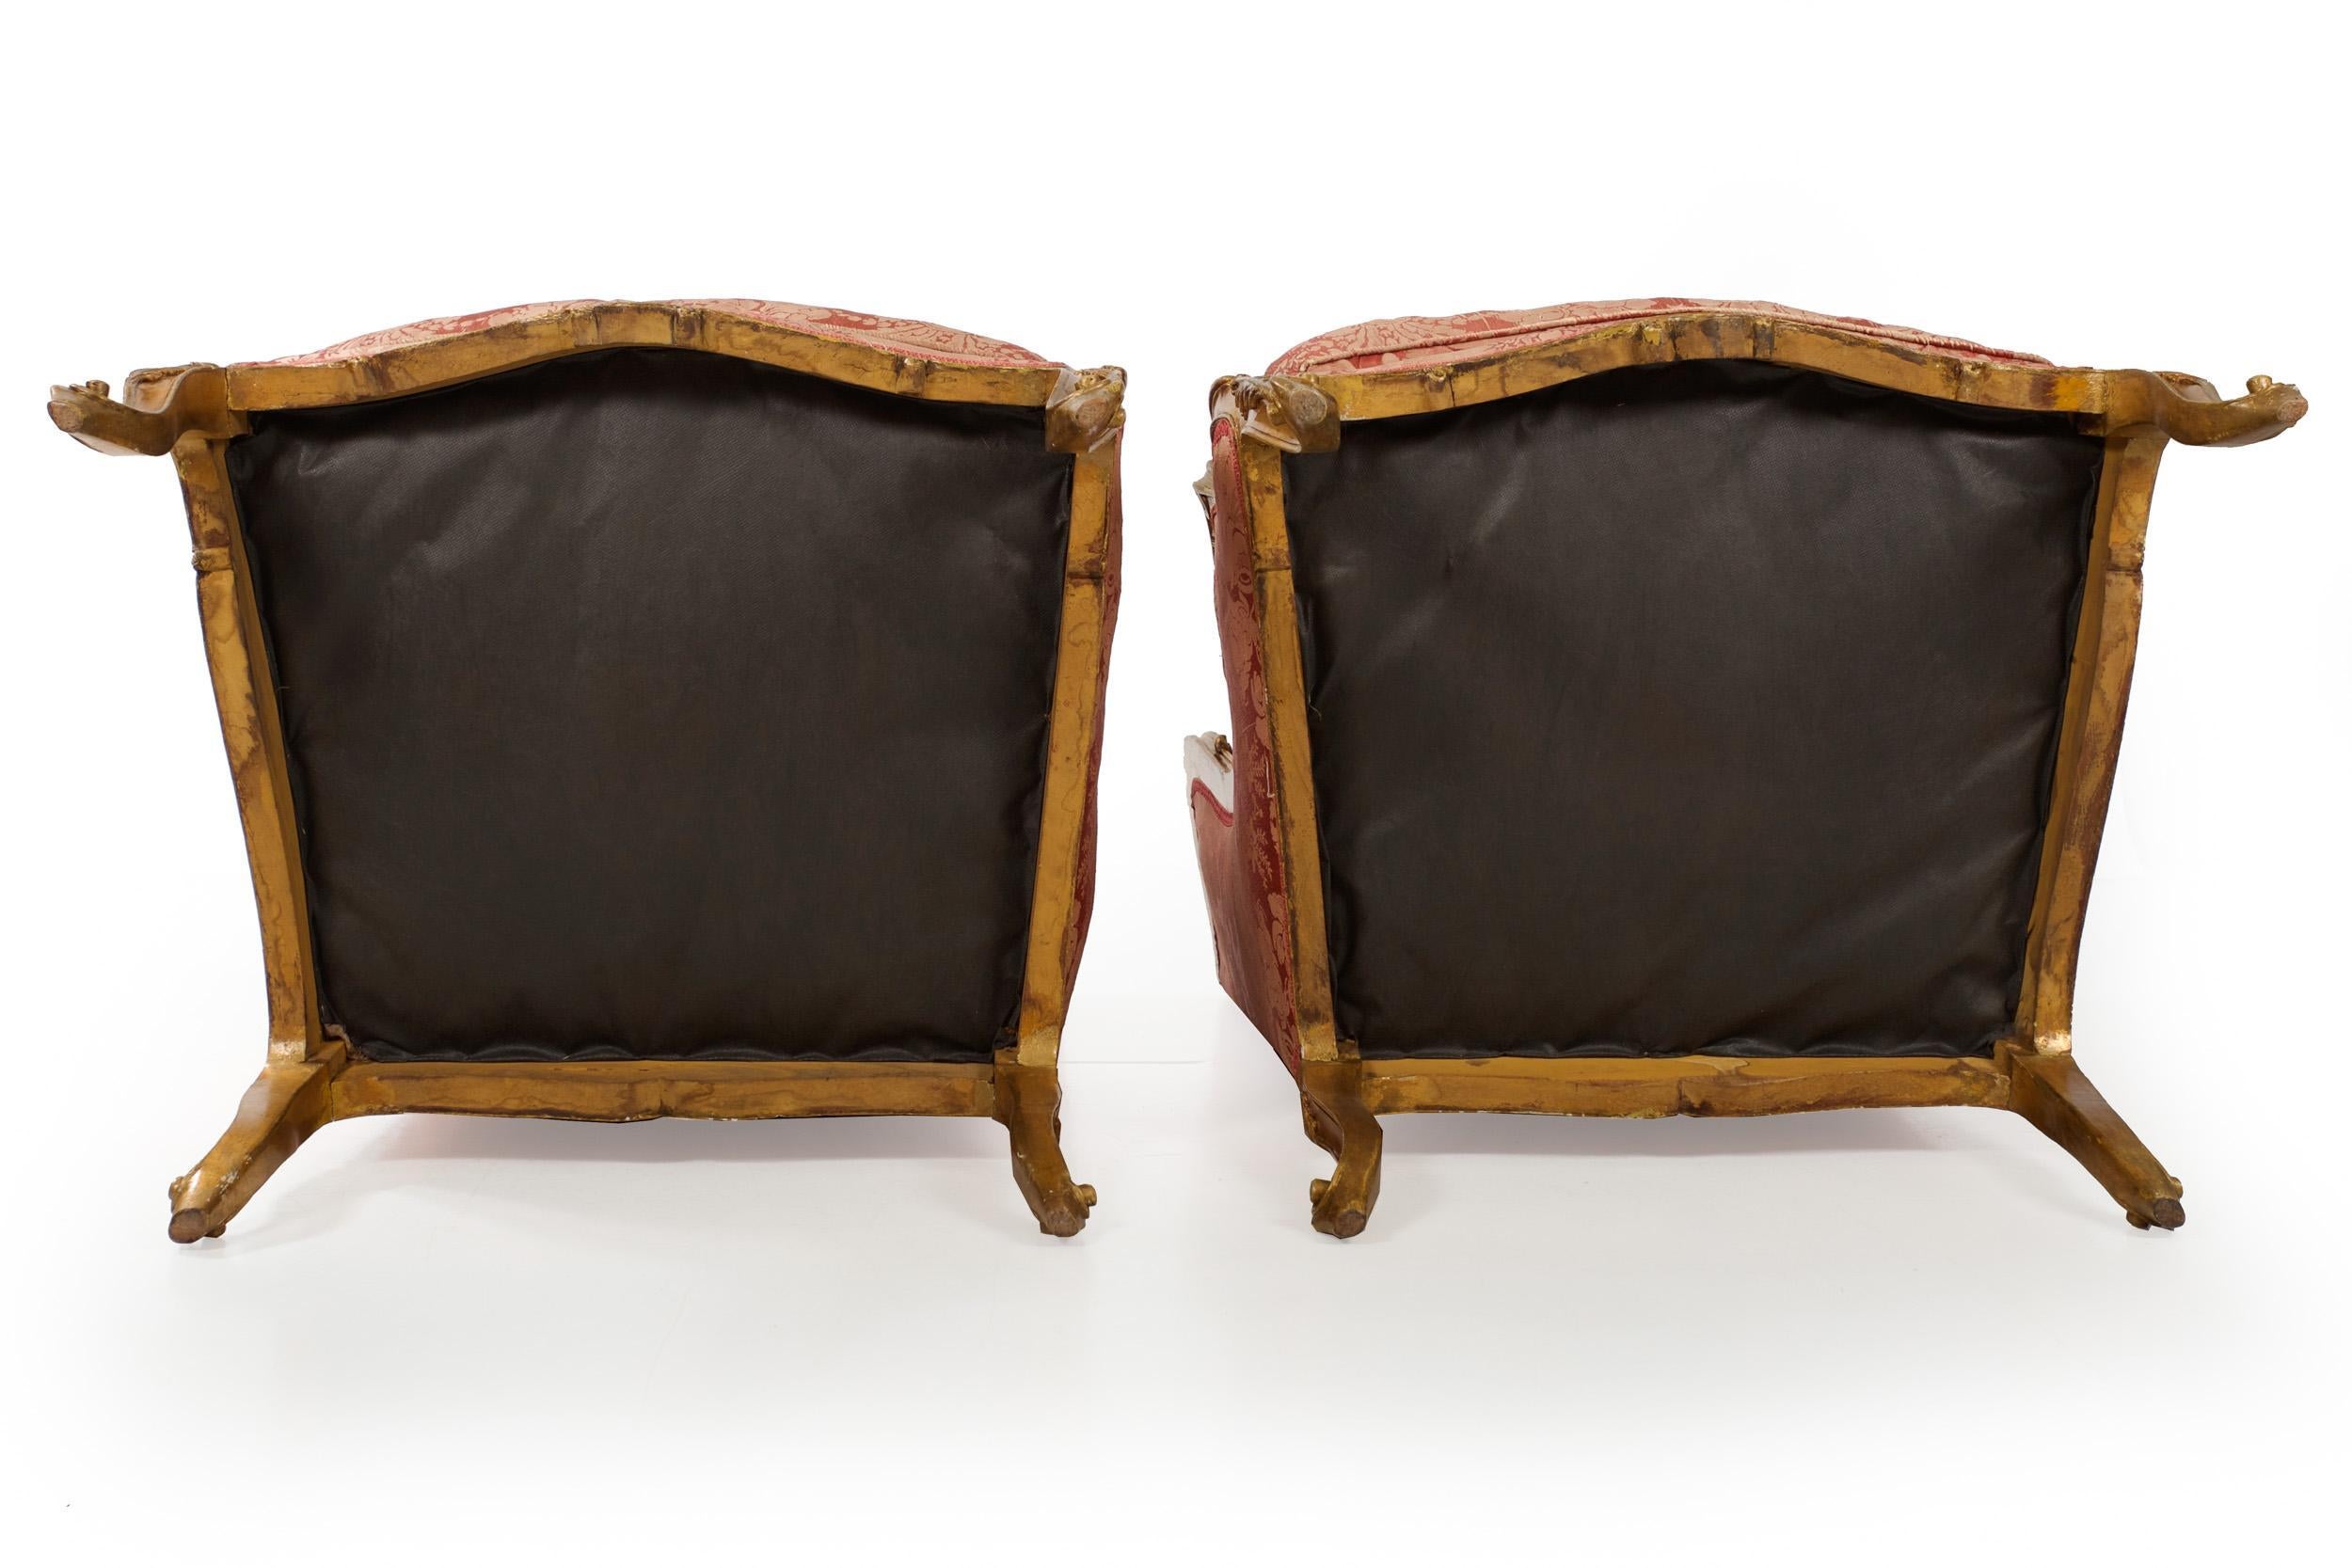 Circa 1880 French Louis XV Style Antique Arm Chairs, a Pair 14